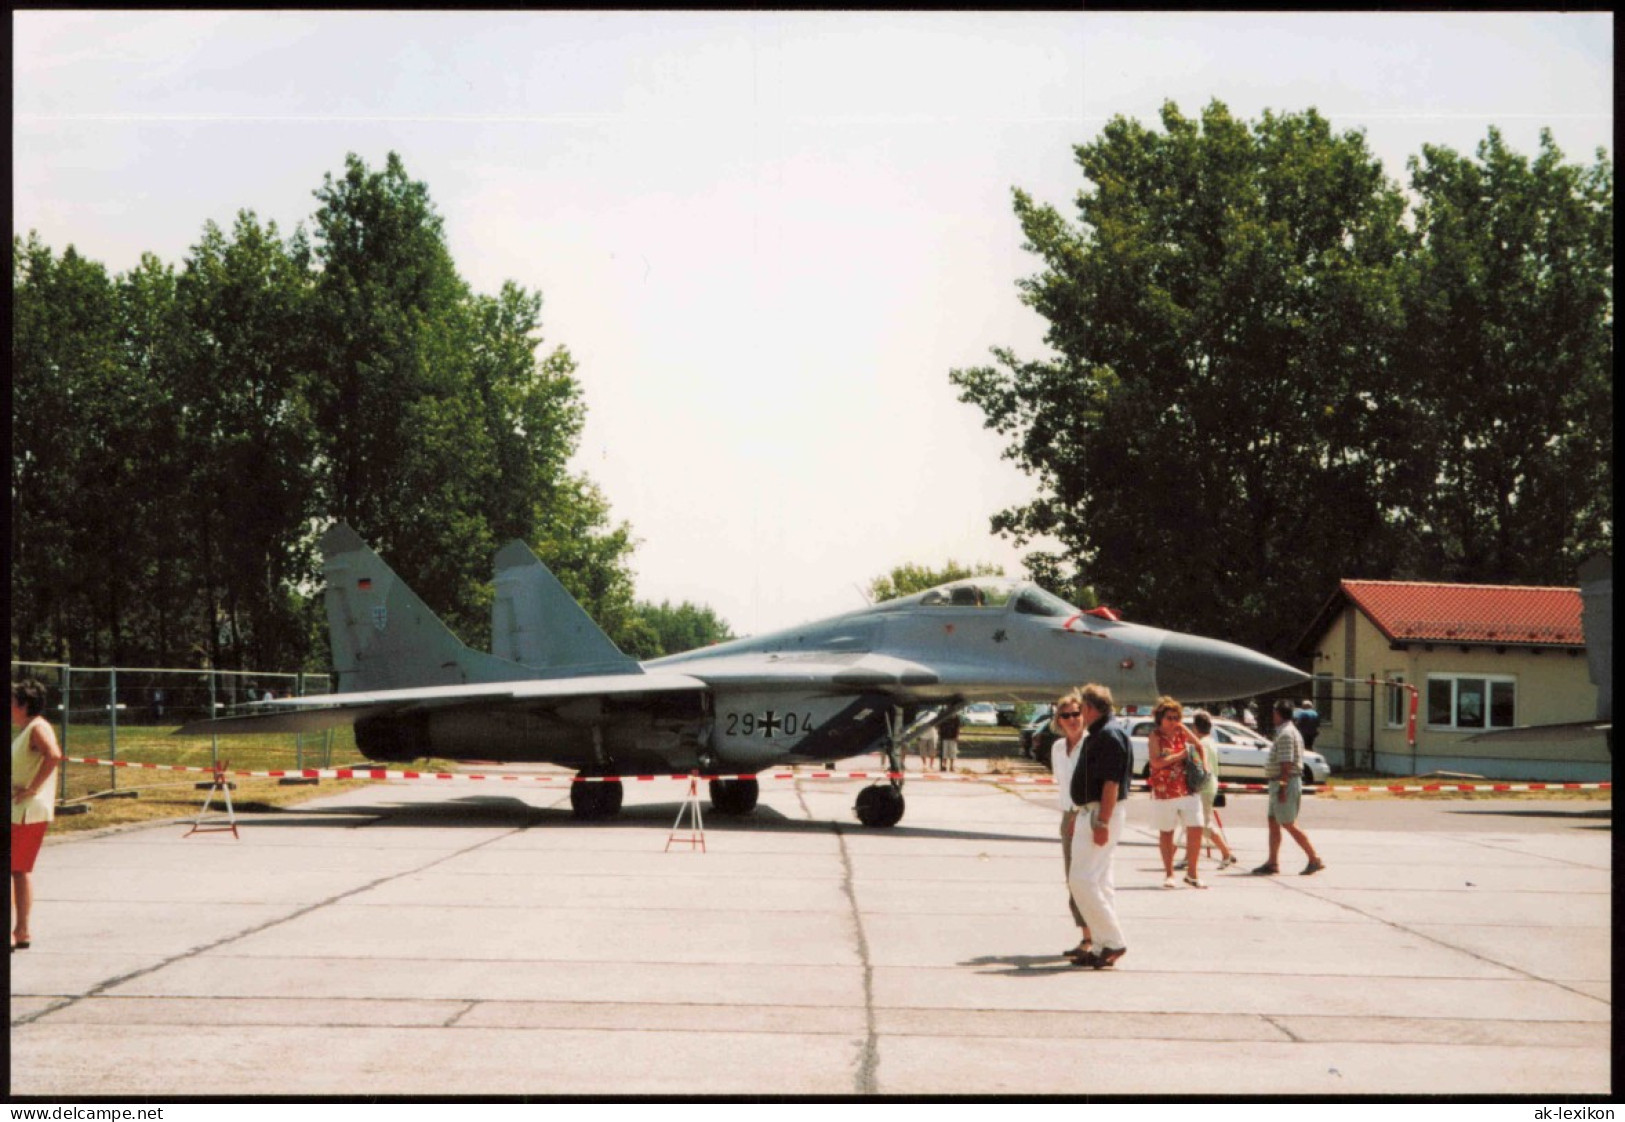 Kampfjet Vom Typ MiG-29 Bundeswehr Flugzeug 1980 Privatfoto - Matériel